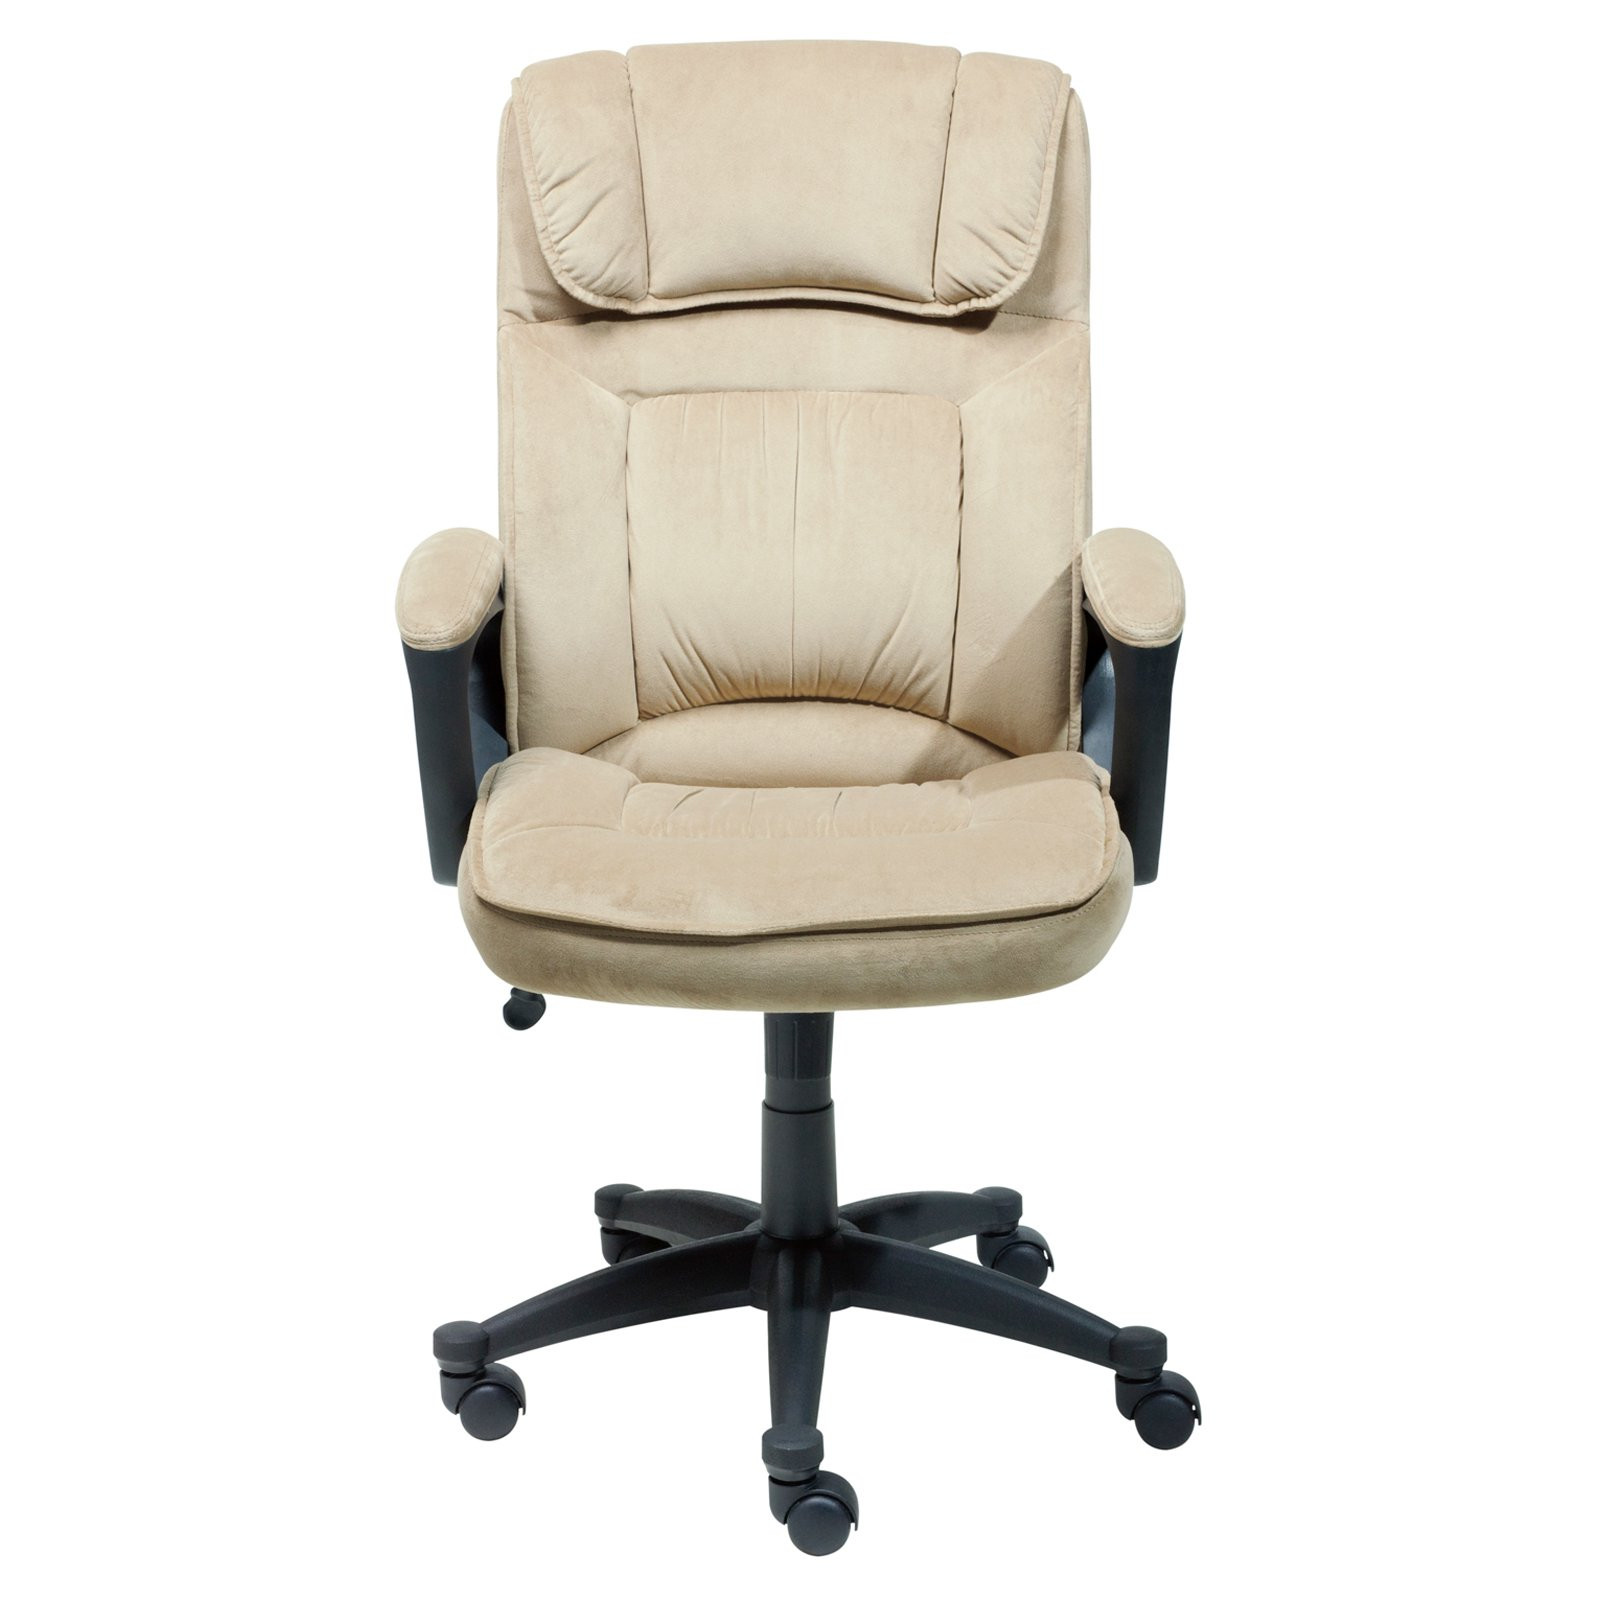 Best ideas about Serta Executive Office Chair
. Save or Pin Serta Microfiber Executive fice Chair Light Beige Now.